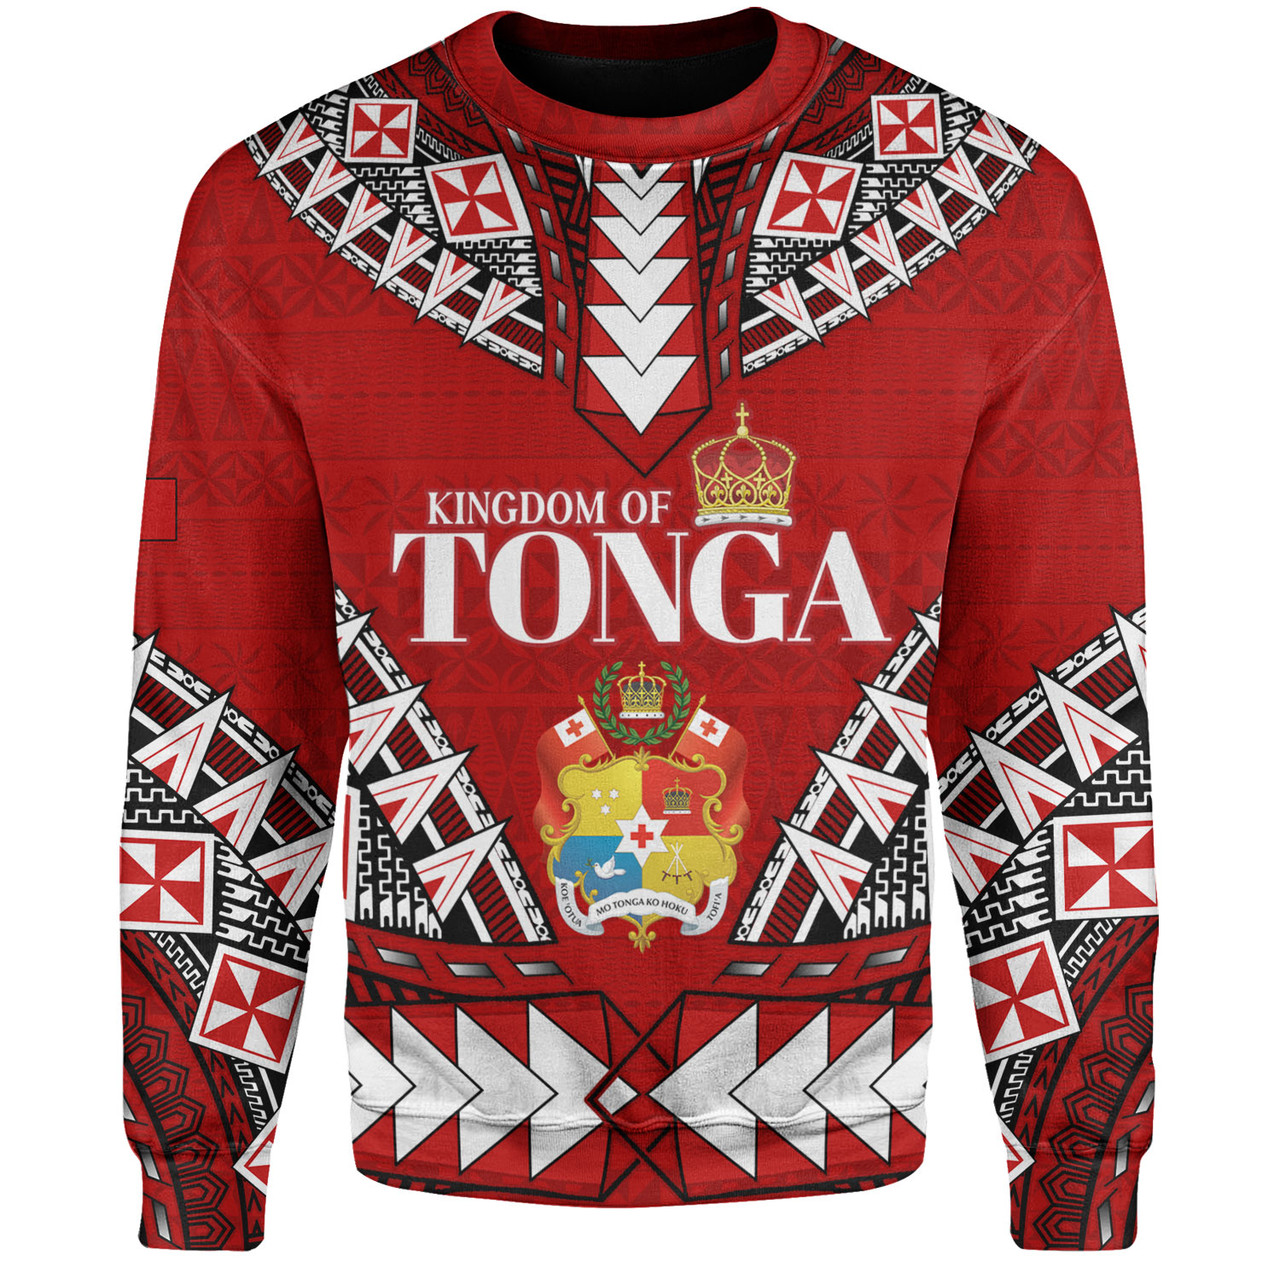 Tonga Sweatshirt Kingdom Of Tonga Tribal Patterns